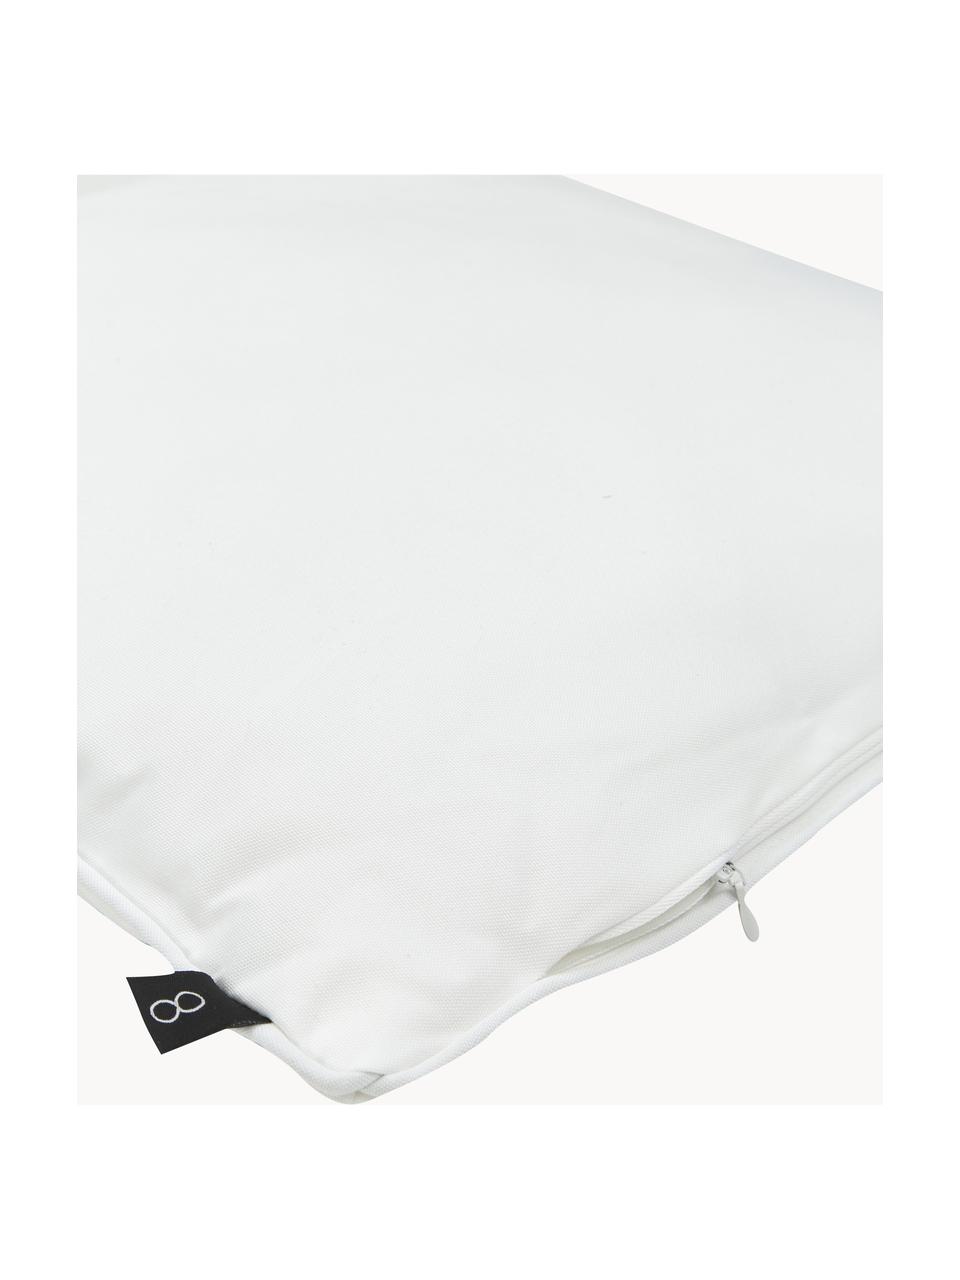 Kissenhülle Arte, 100% Polyester, Weiß, Schwarz, B 45 x L 45 cm